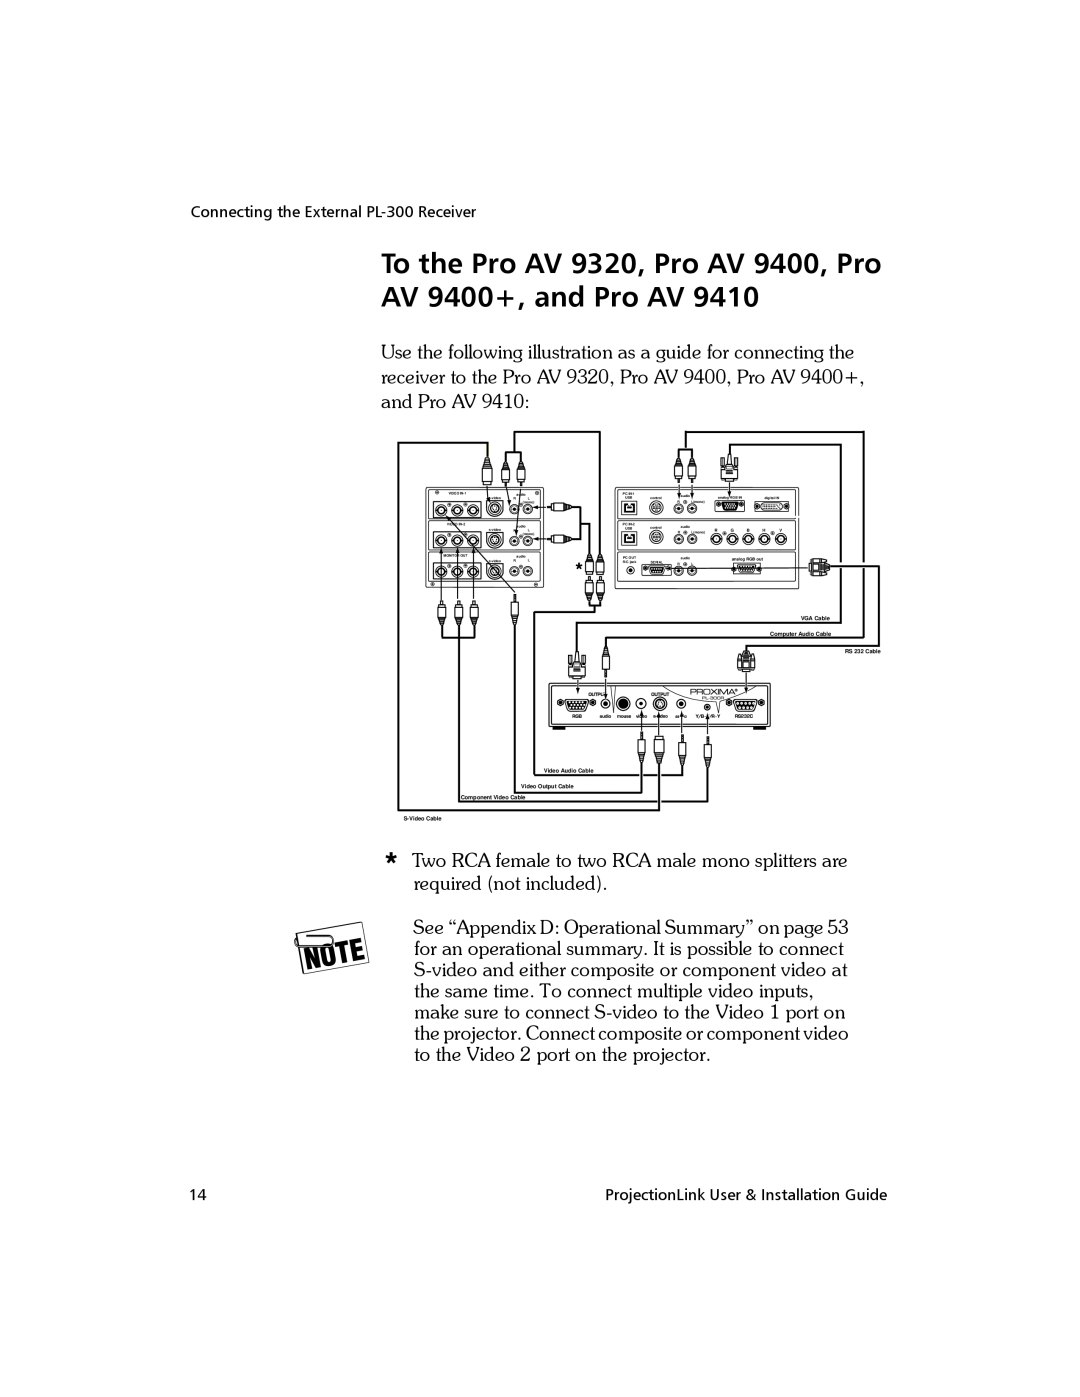 Proxima ASA BNDL-001, PL-300E manual To the Pro AV 9320, Pro AV 9400, Pro AV 9400+, and Pro AV 